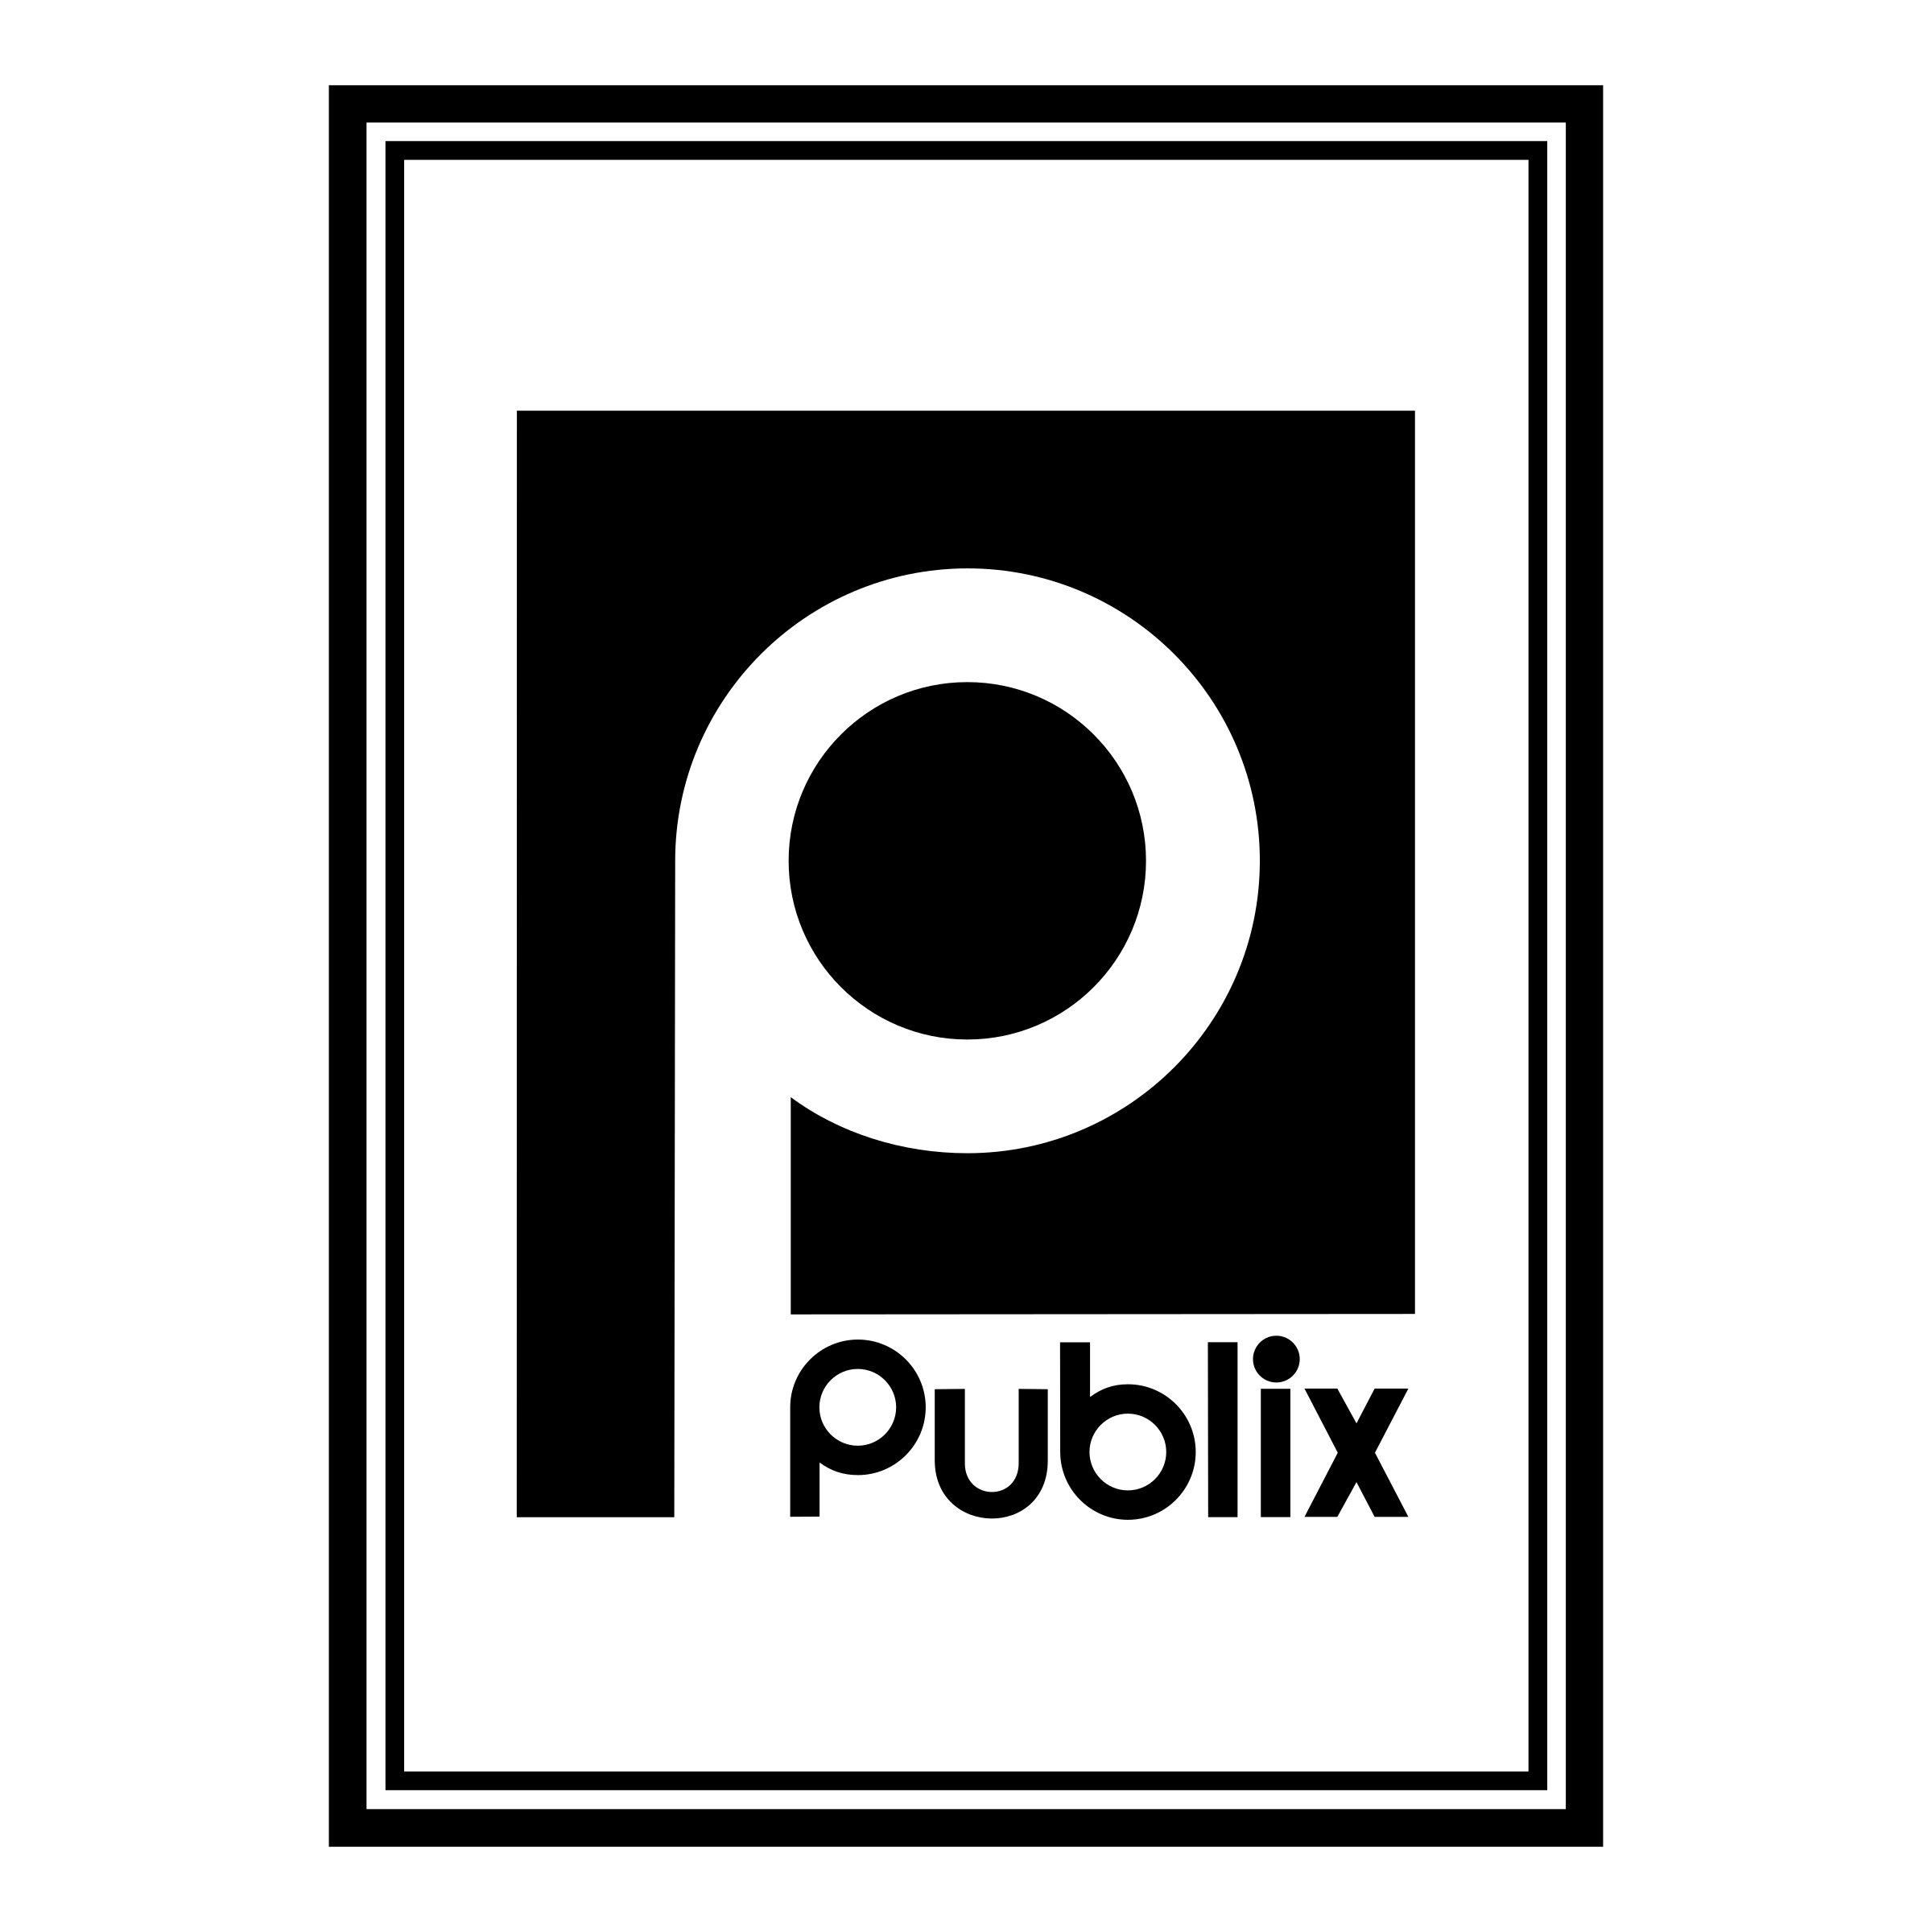 Publix Logo - Publix Logo PNG Transparent & SVG Vector - Freebie Supply